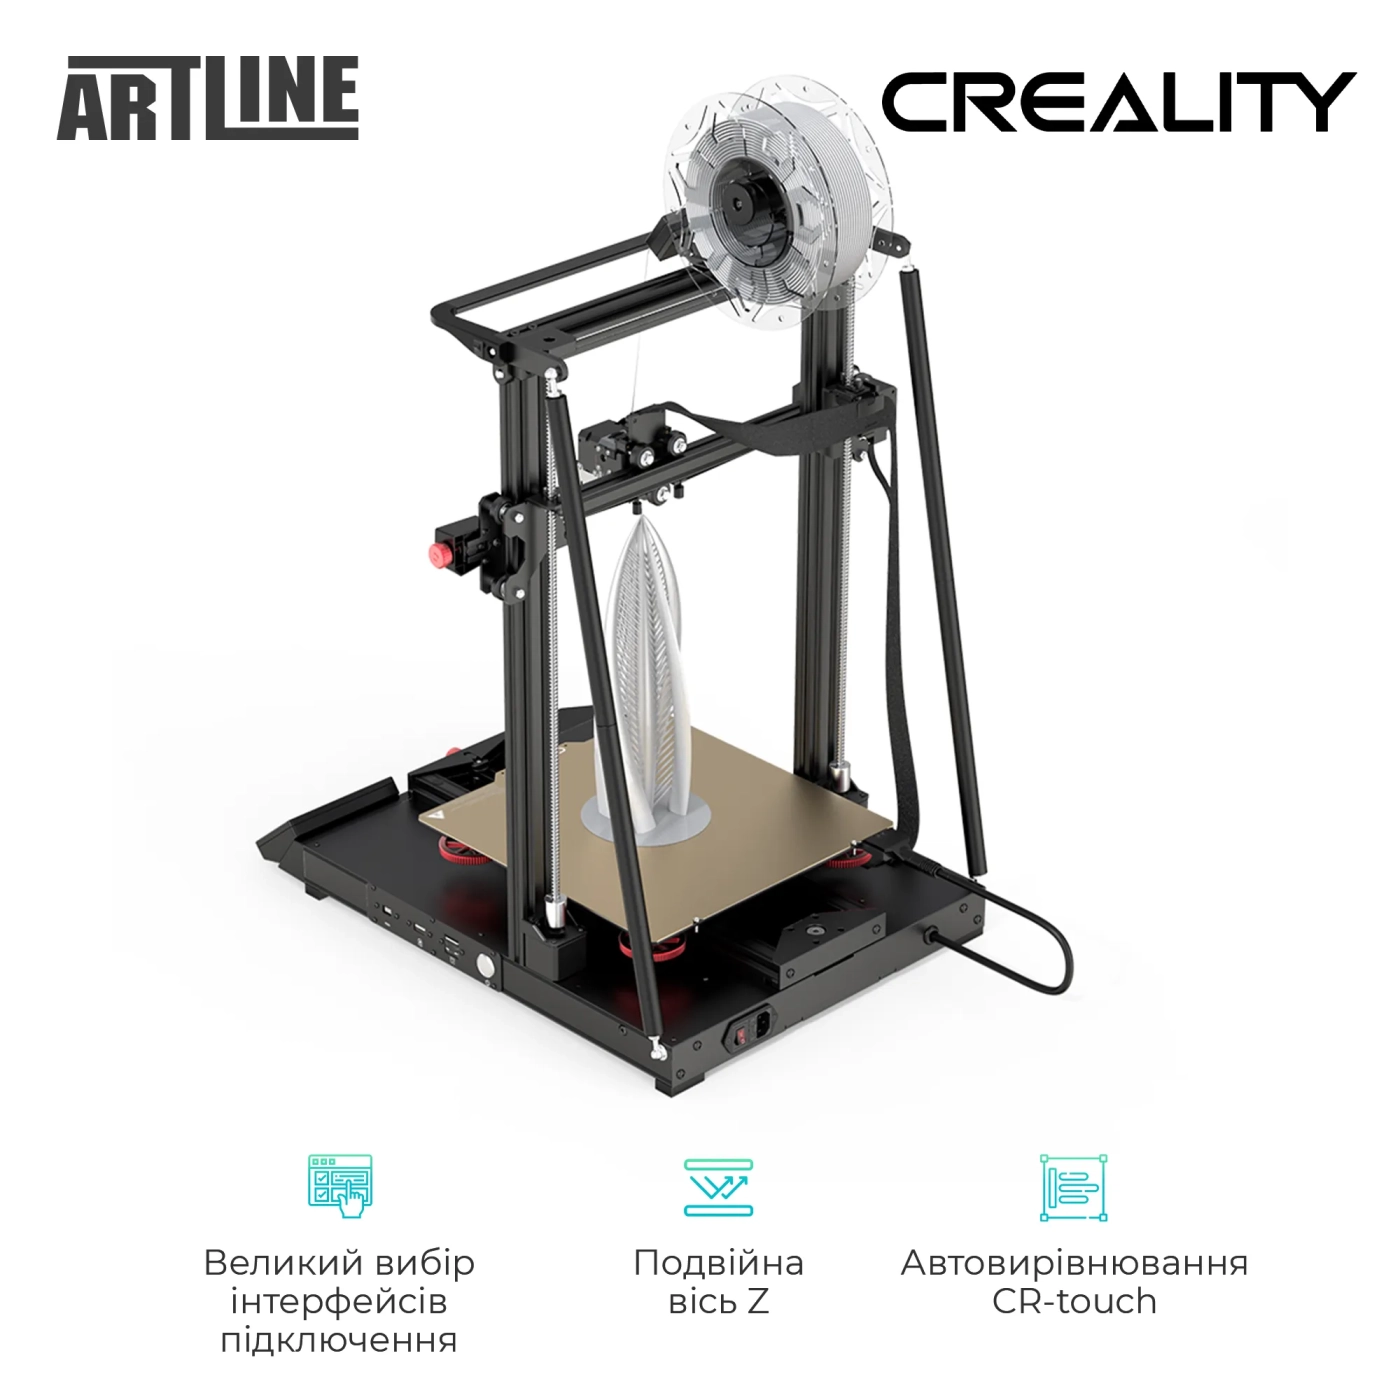 Купить 3D-принтер Creality CR-10 Smart Pro - фото 4